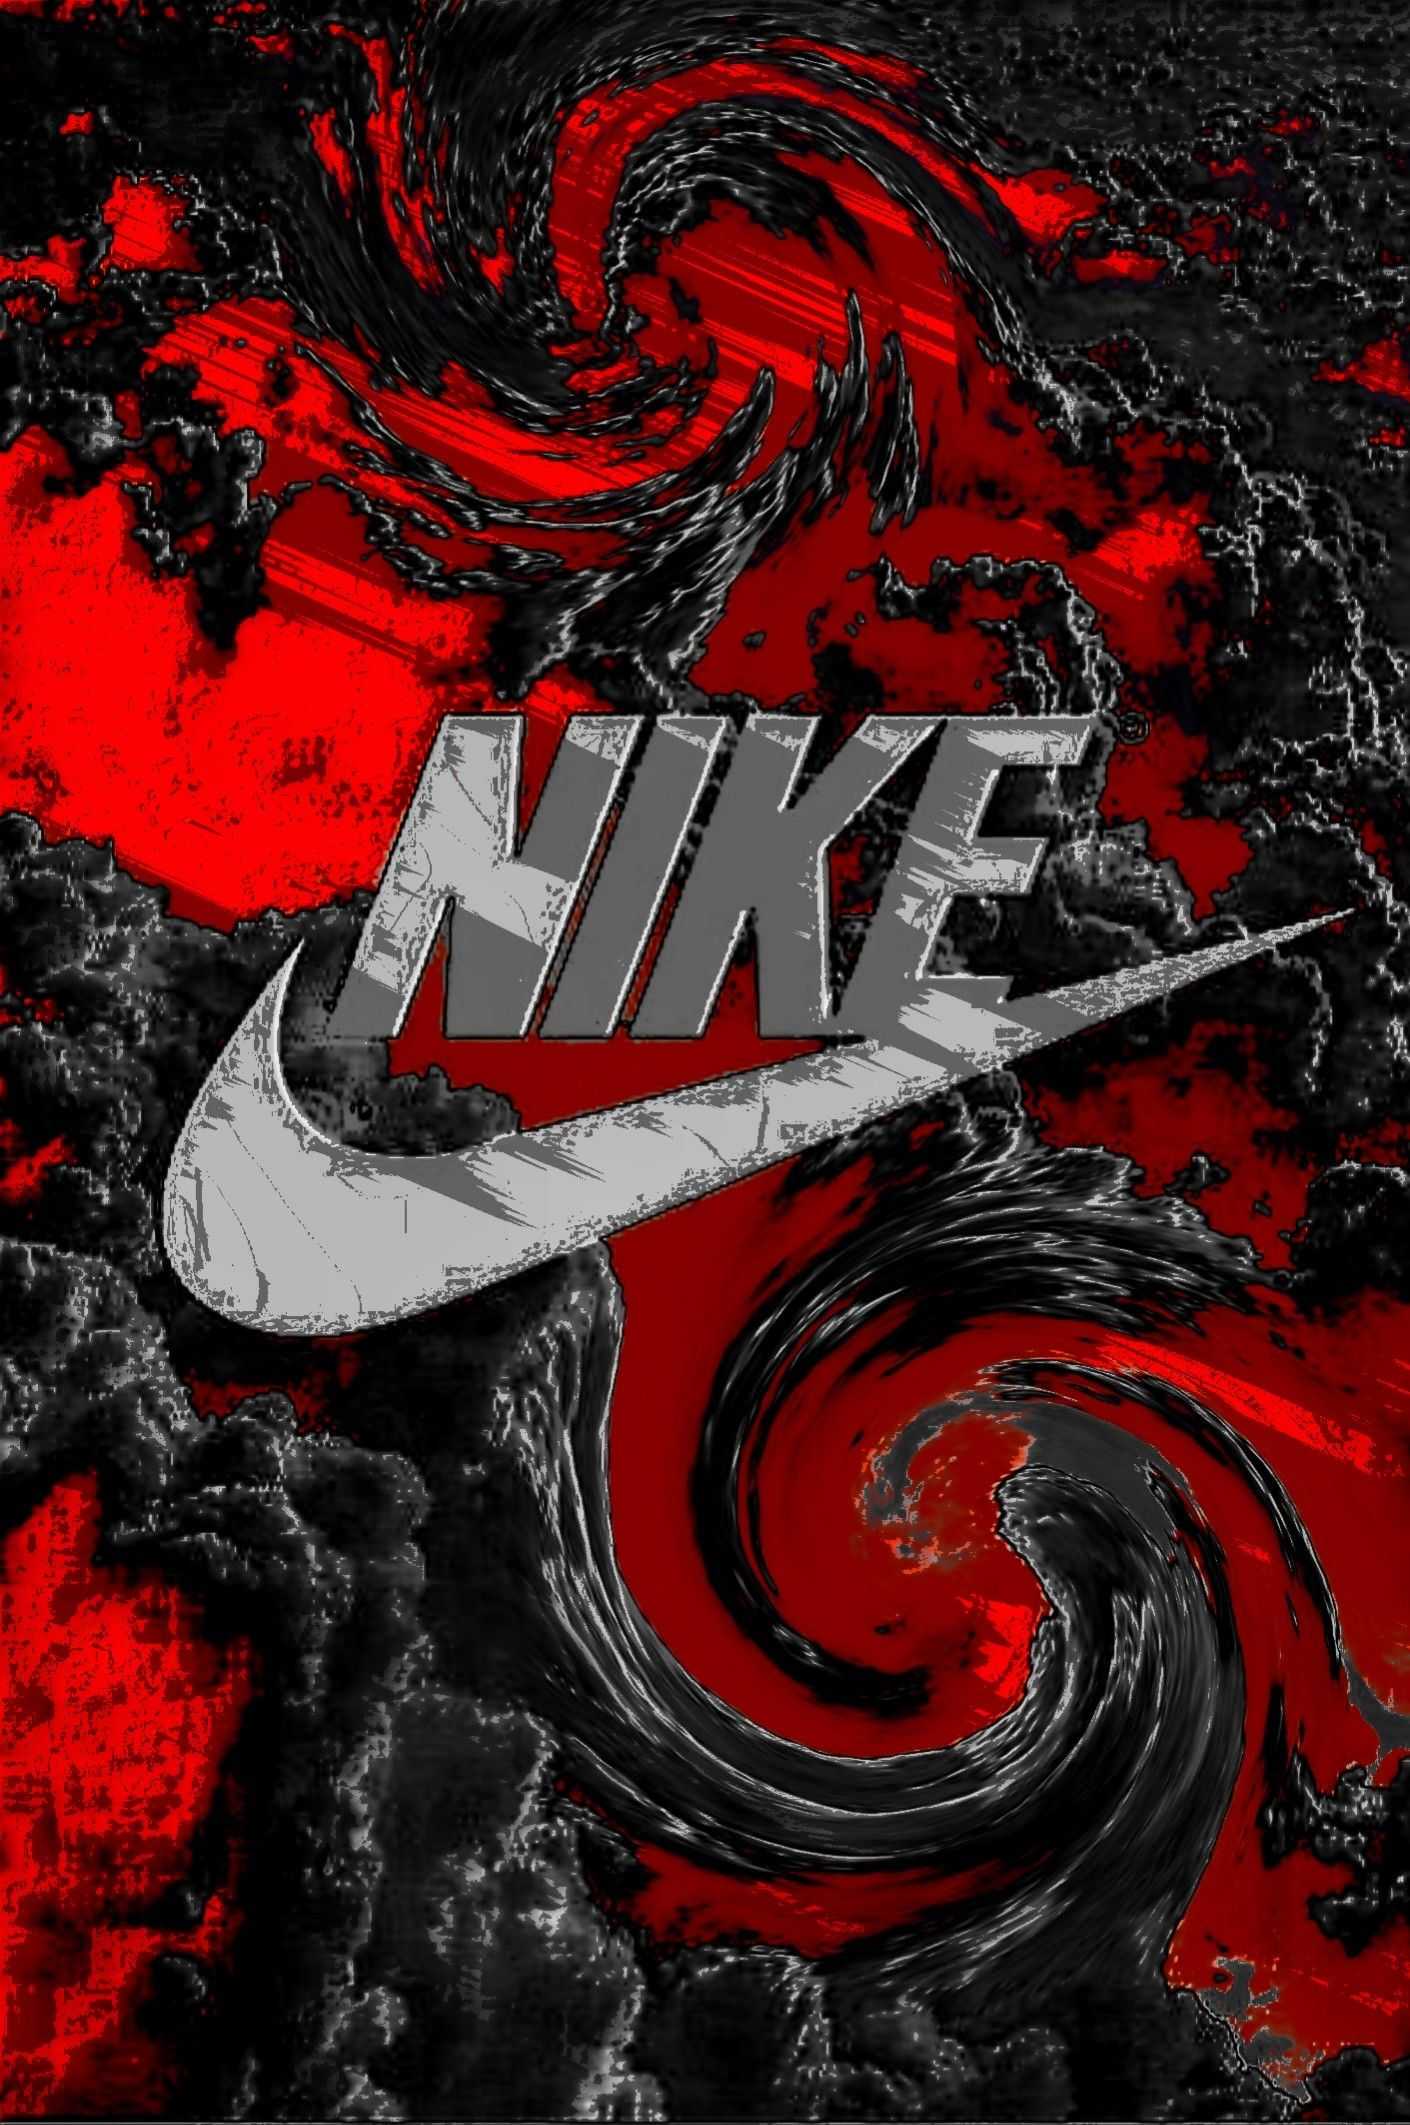 Nike Wallpaper 4K